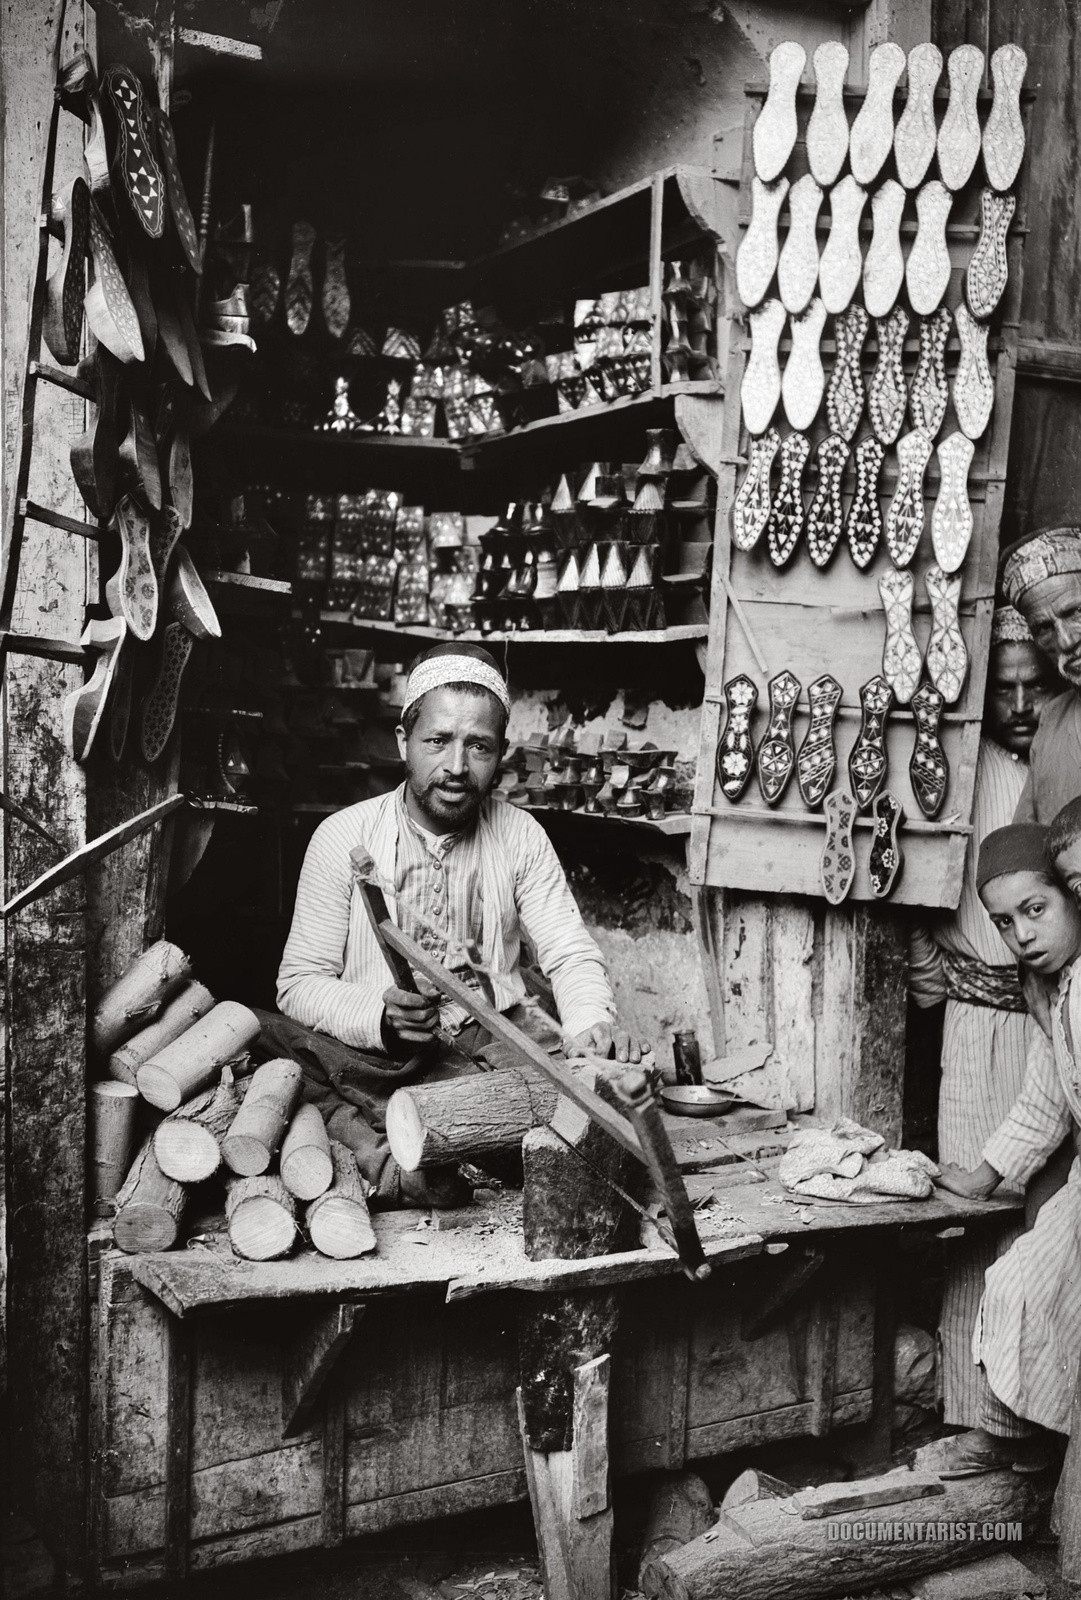 damascene inlaid-slipper maker. damascus syria 1900-1920